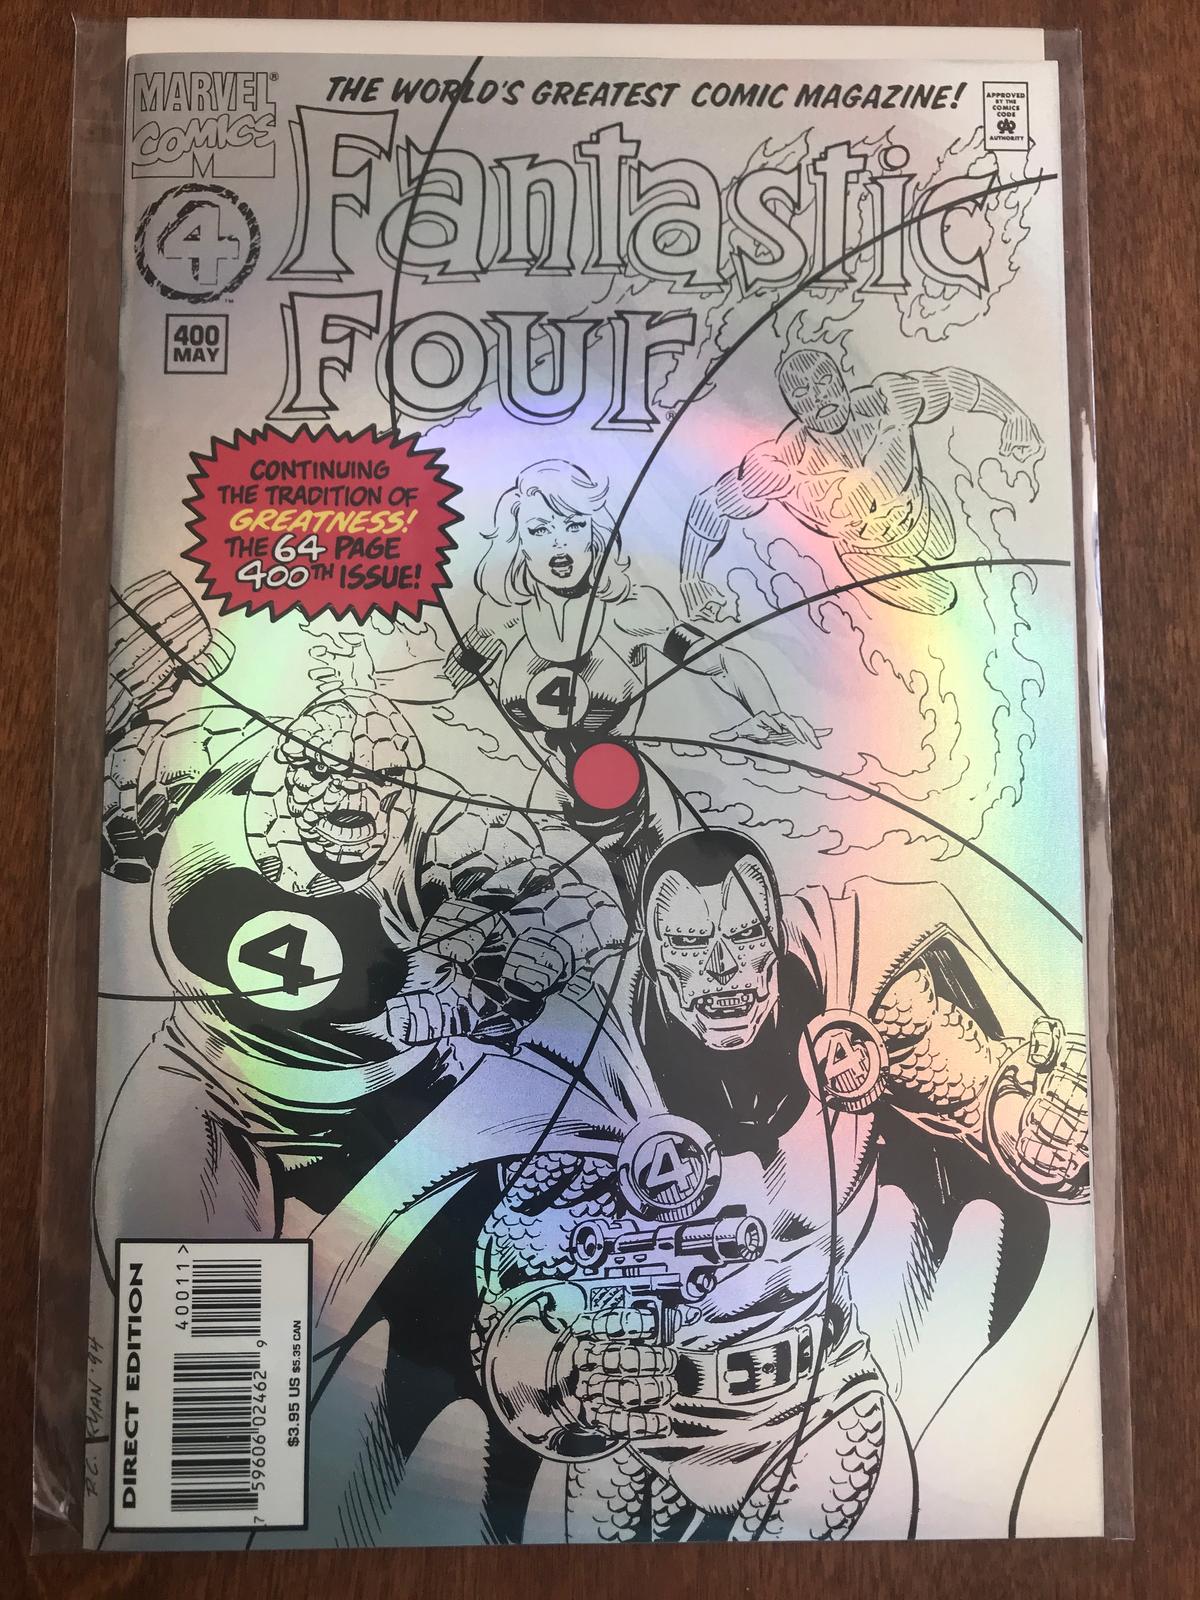 Fantastic Four Comic #400 Marvel Comics Giant Sized Rainbow Foil Cover Special